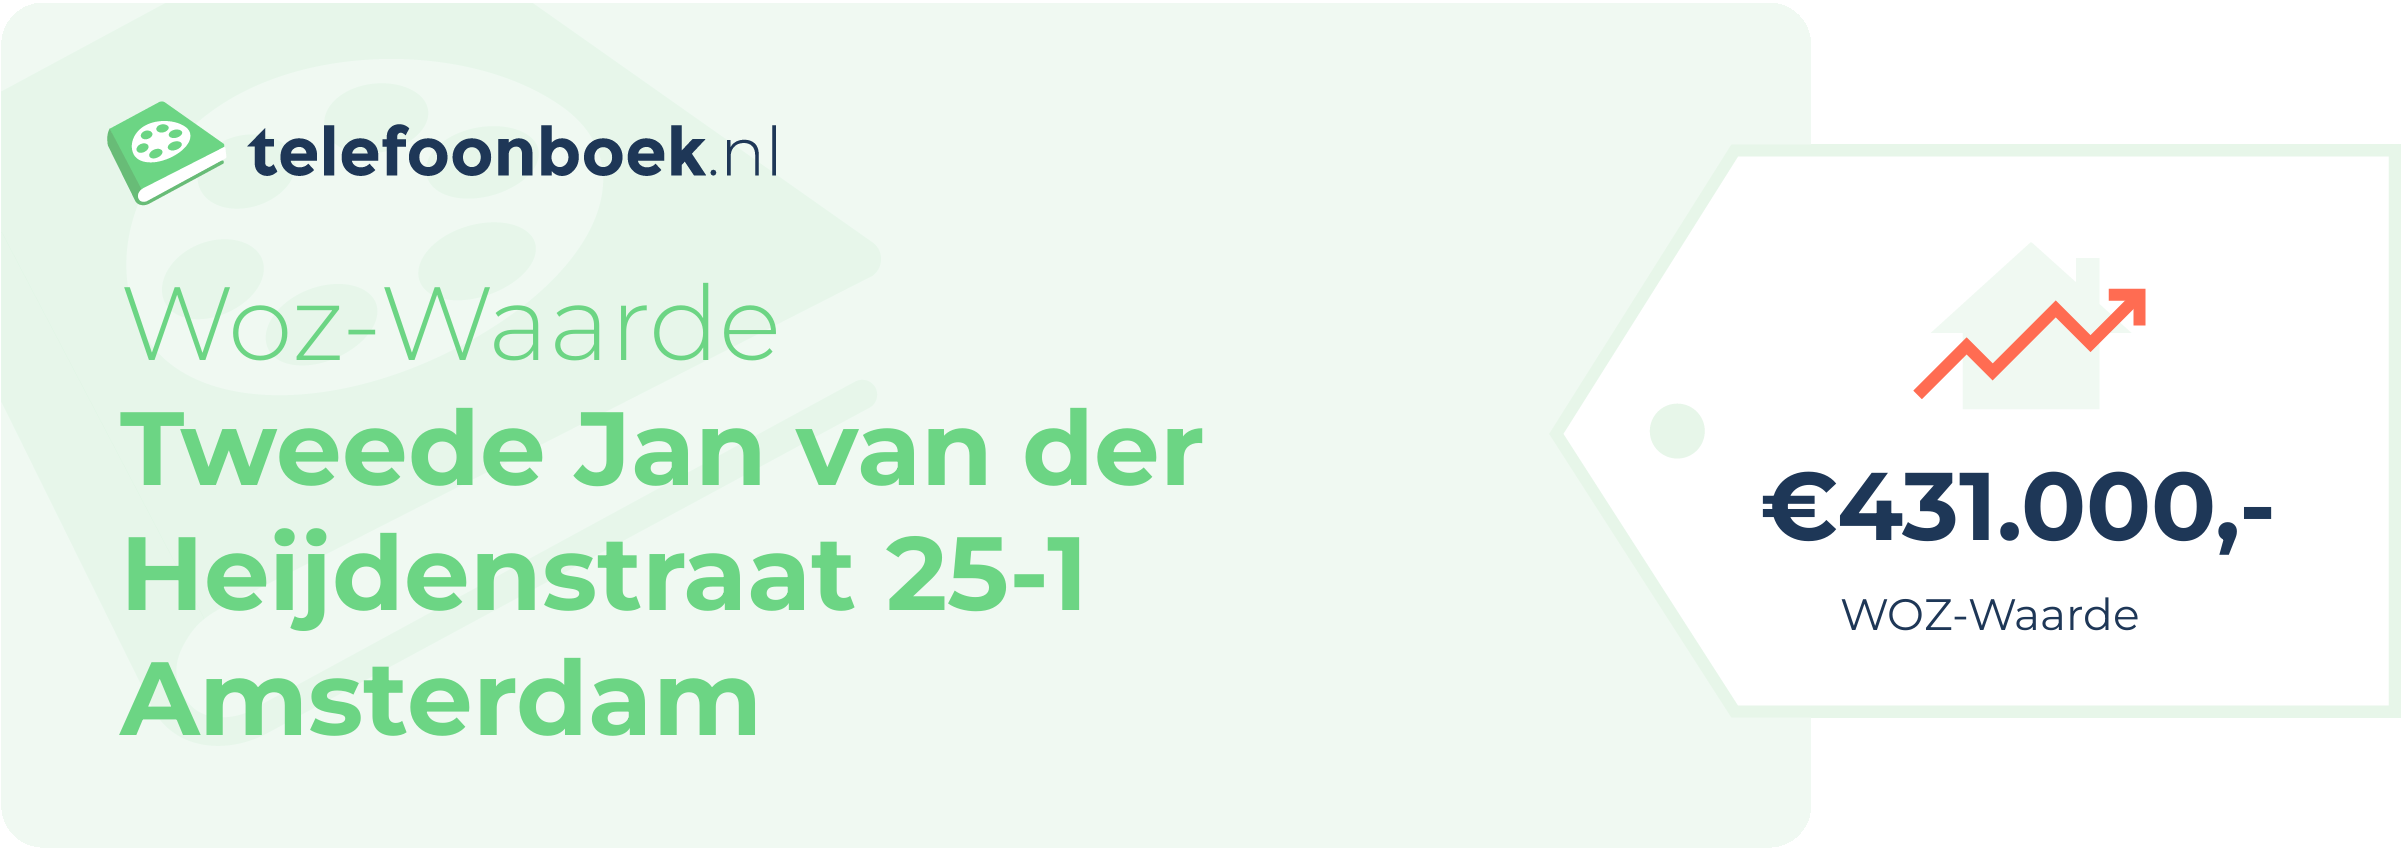 WOZ-waarde Tweede Jan Van Der Heijdenstraat 25-1 Amsterdam